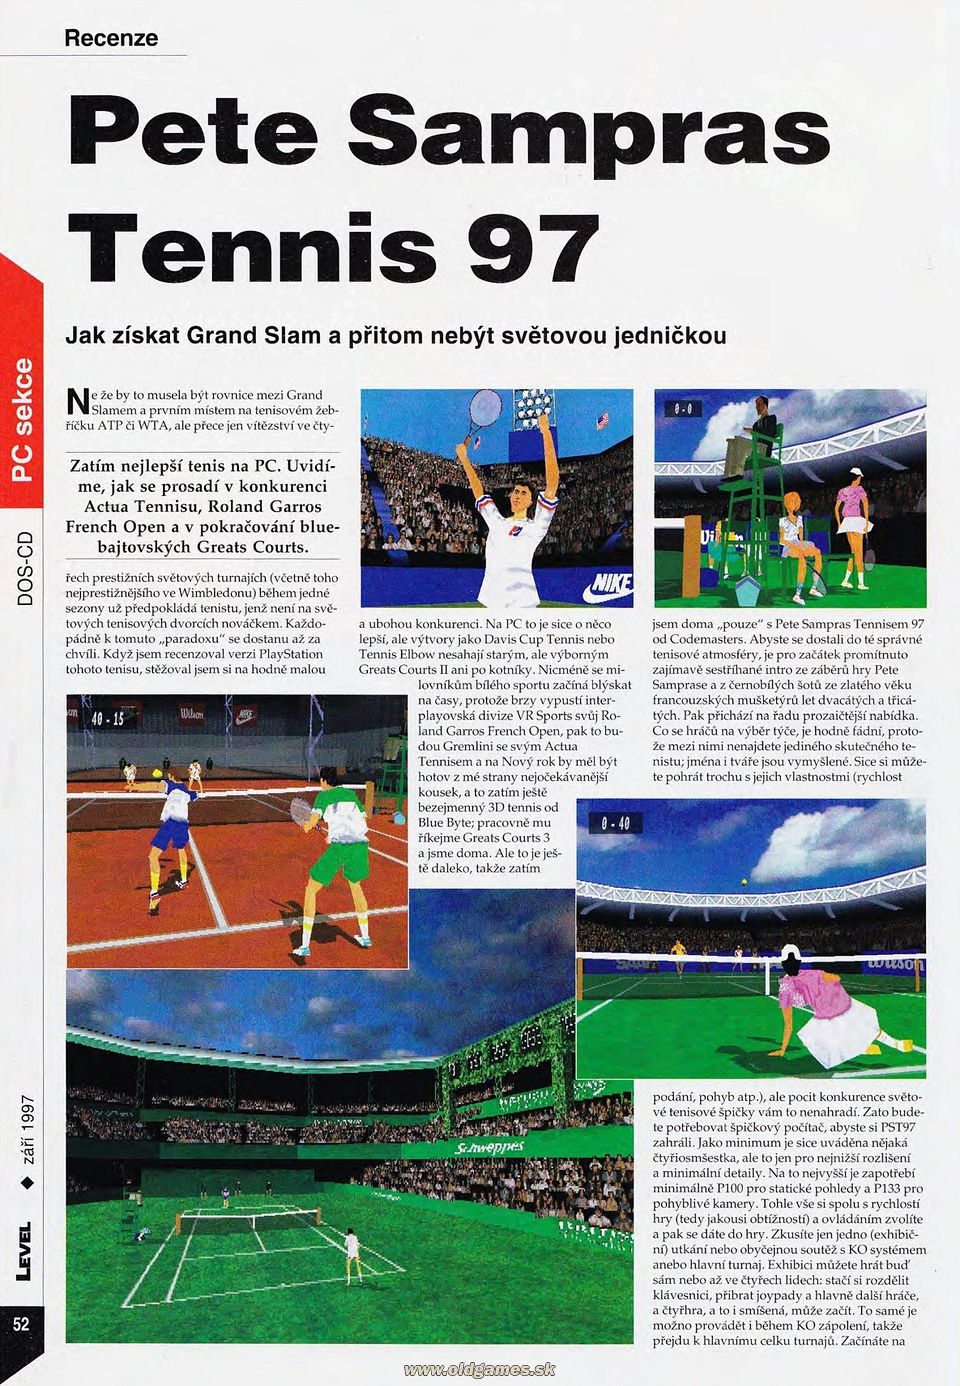 Pete Sampras Tennis 97